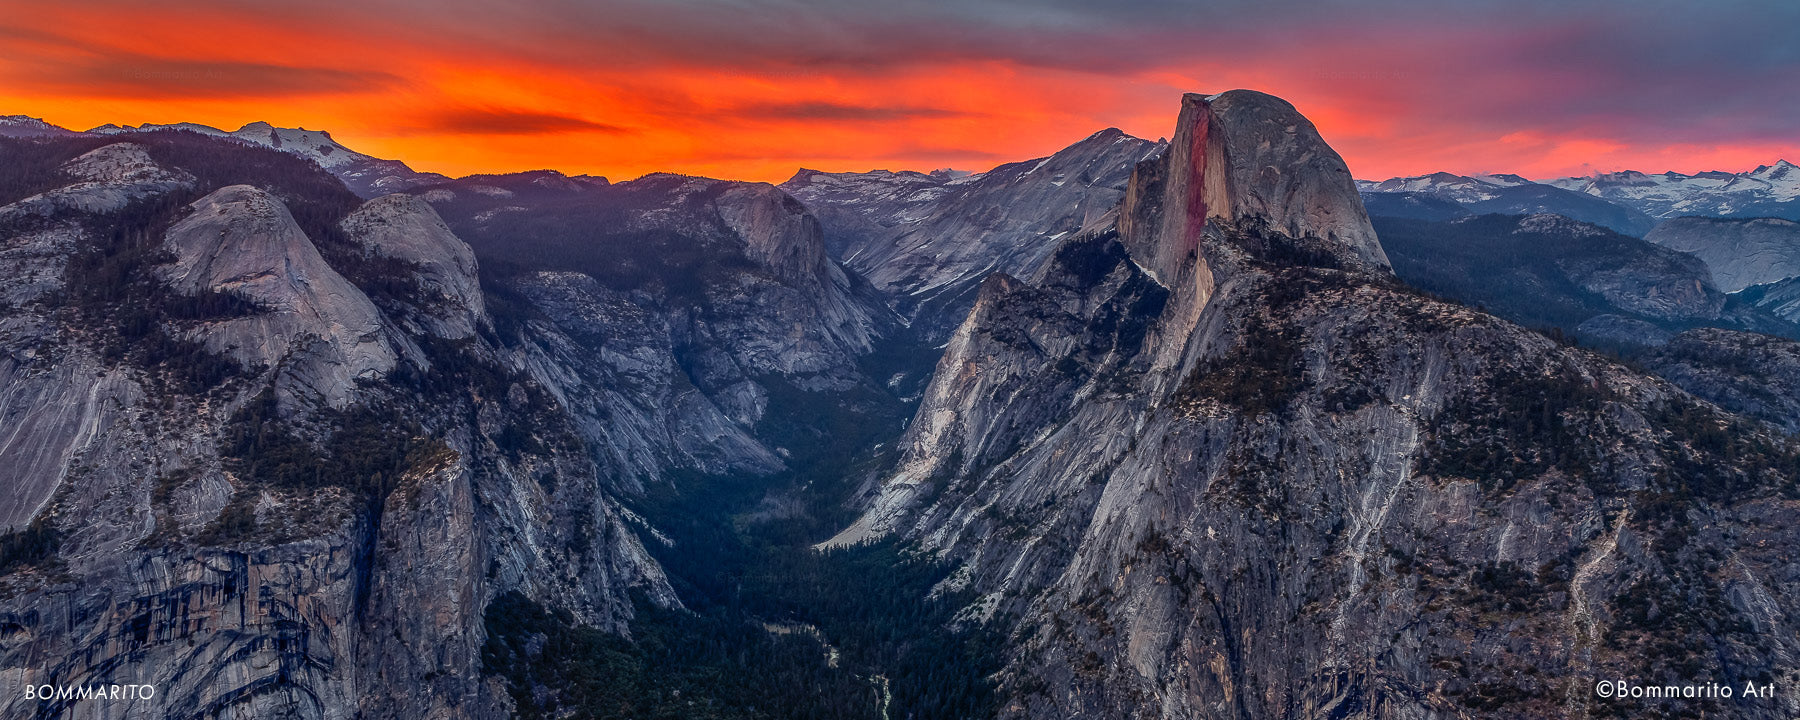 Little Yosemite Valley & Half Dome